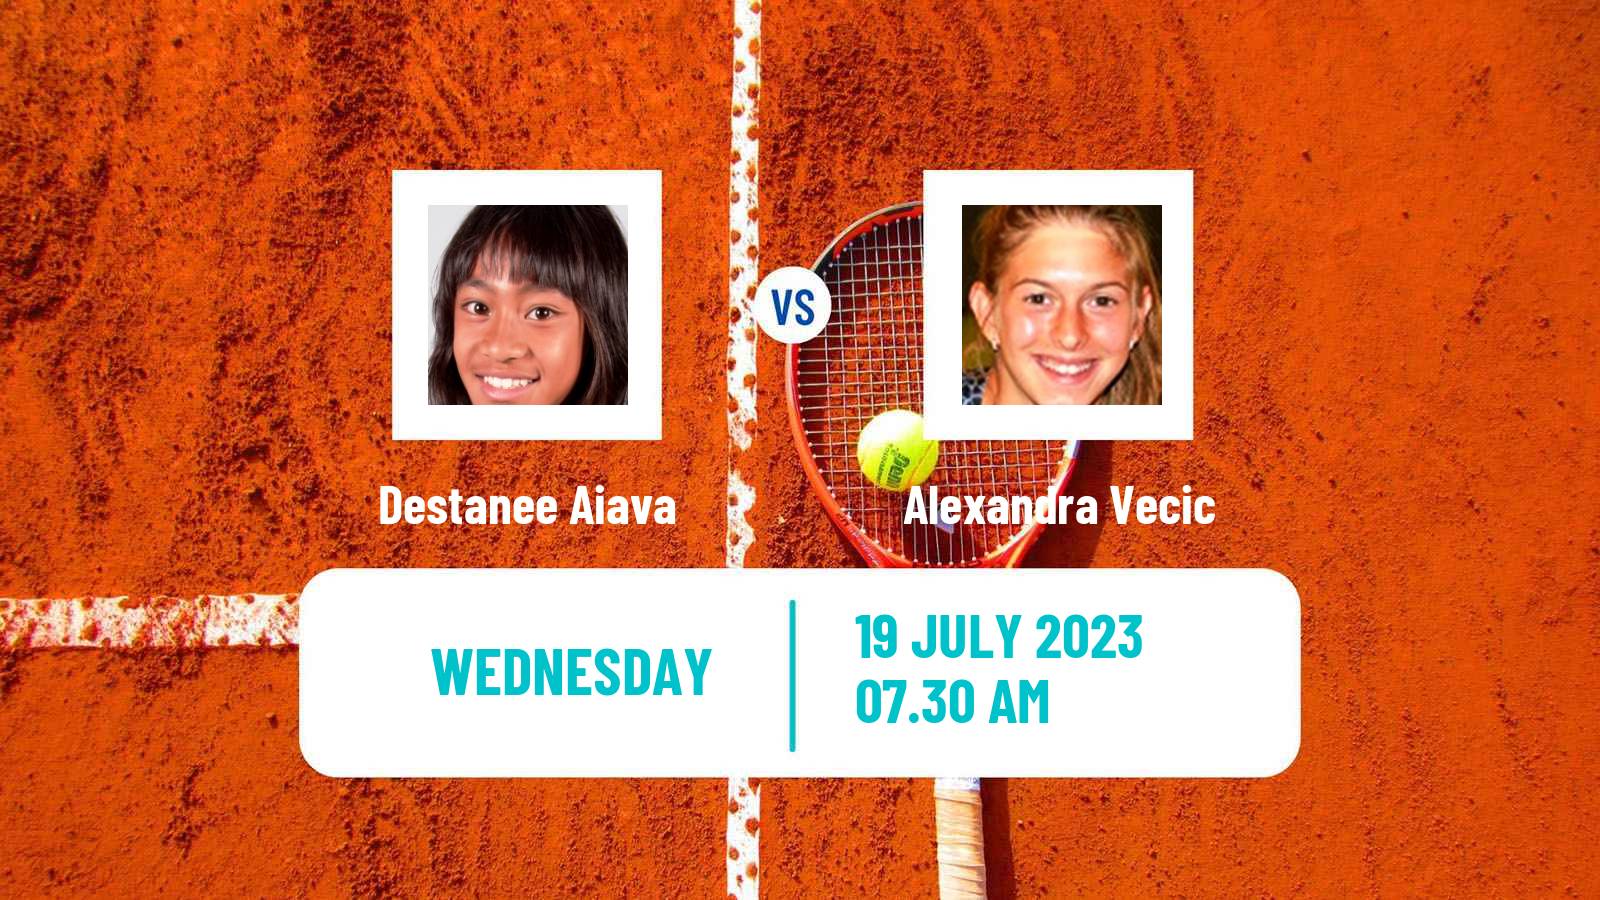 Tennis ITF W25 Roehampton Women Destanee Aiava - Alexandra Vecic